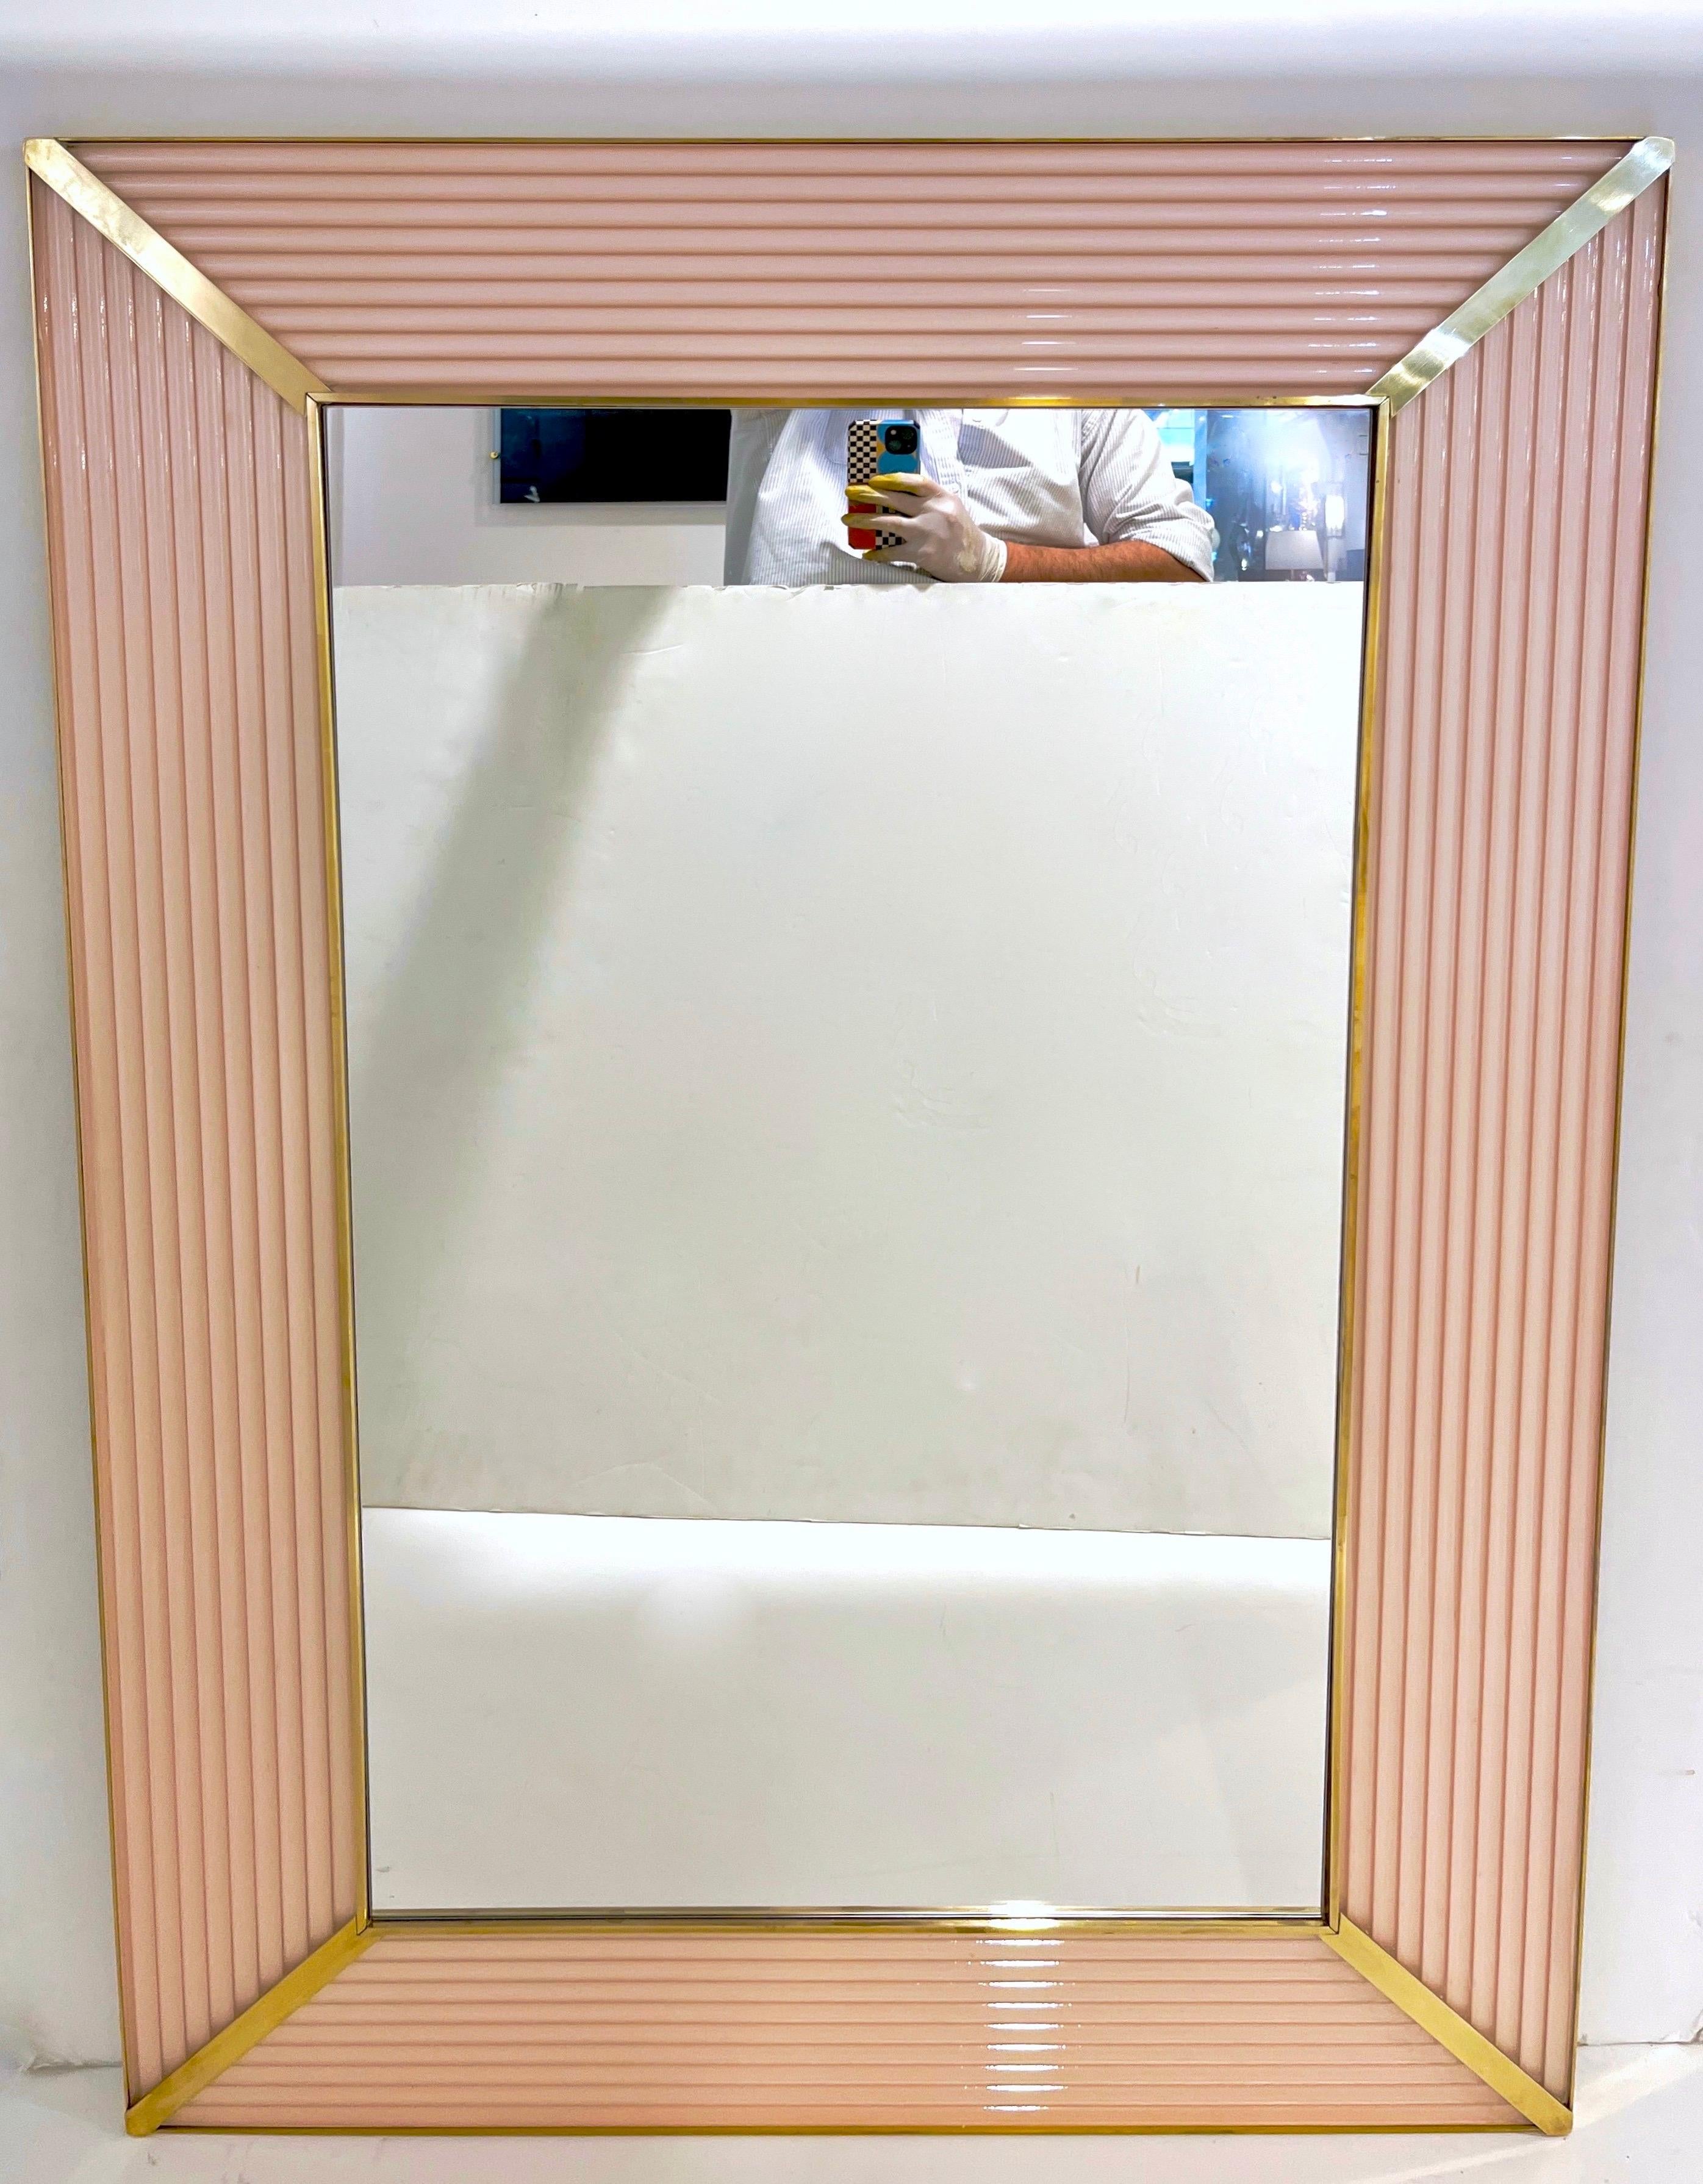 Contemporary Bespoke Italian Art Deco Design Iridescent Pink Fluted Murano Glass Brass Mirror For Sale